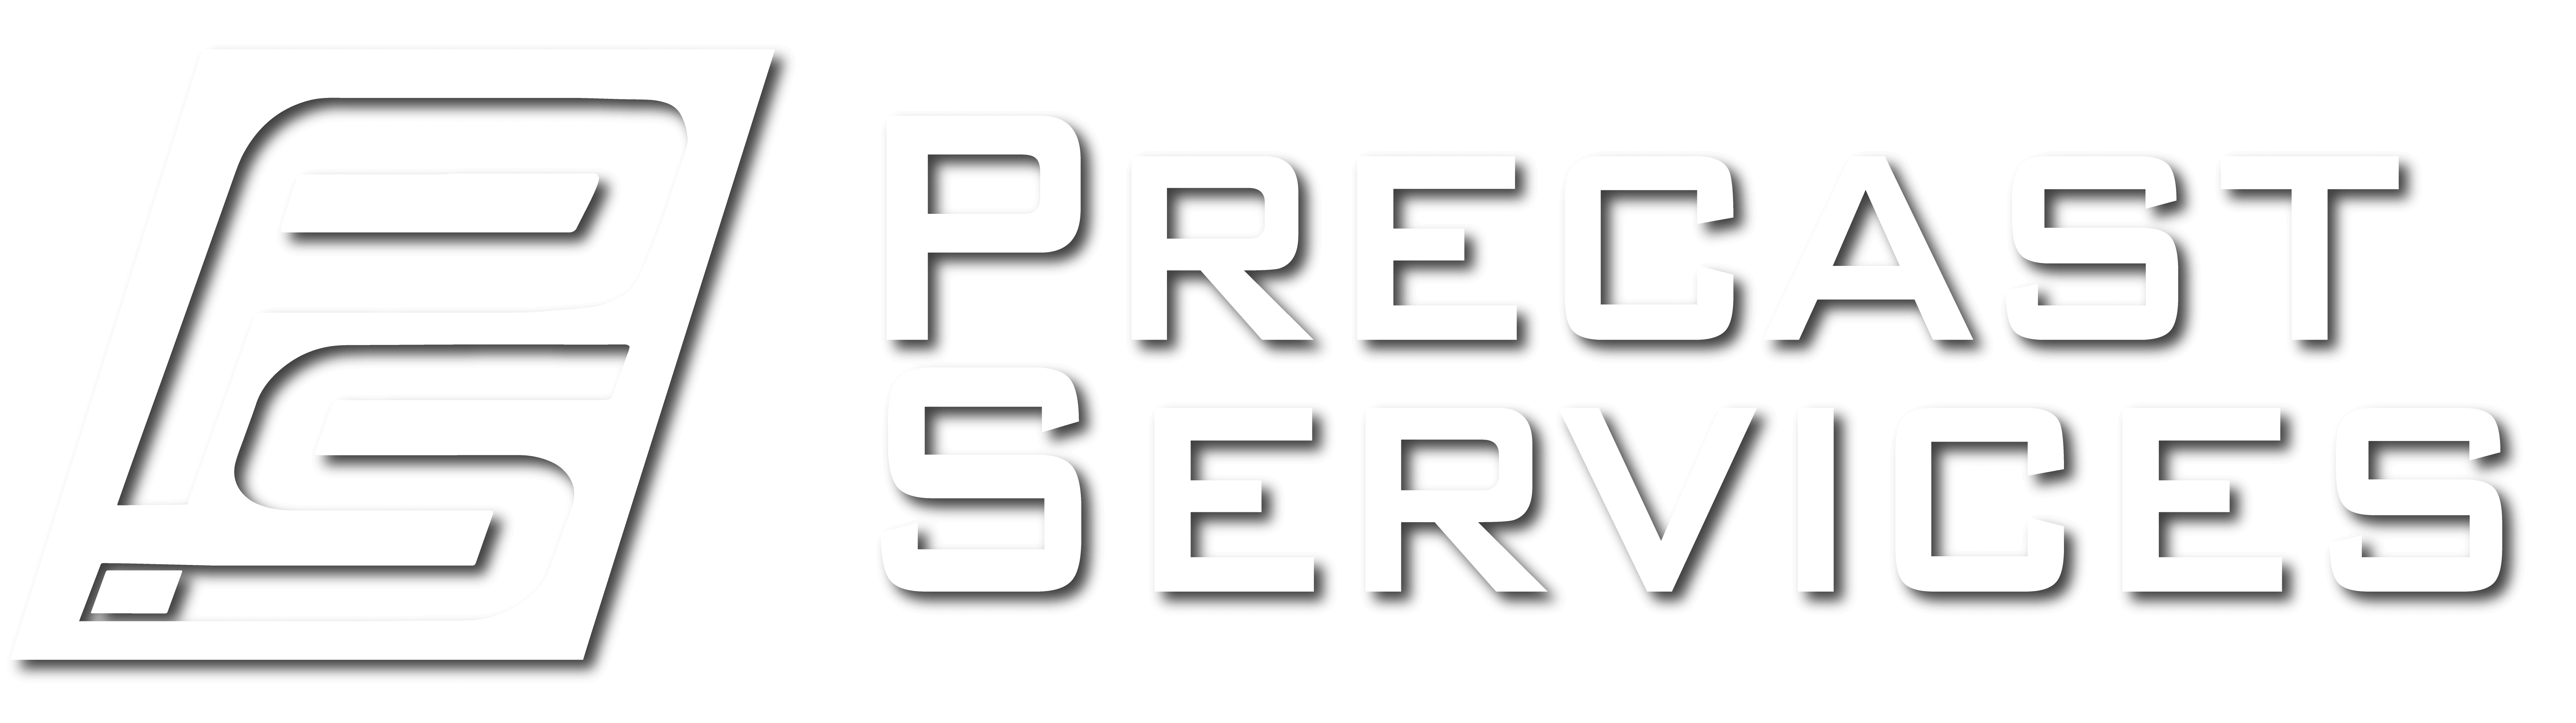 Precast Services, Inc. - Logo for banner